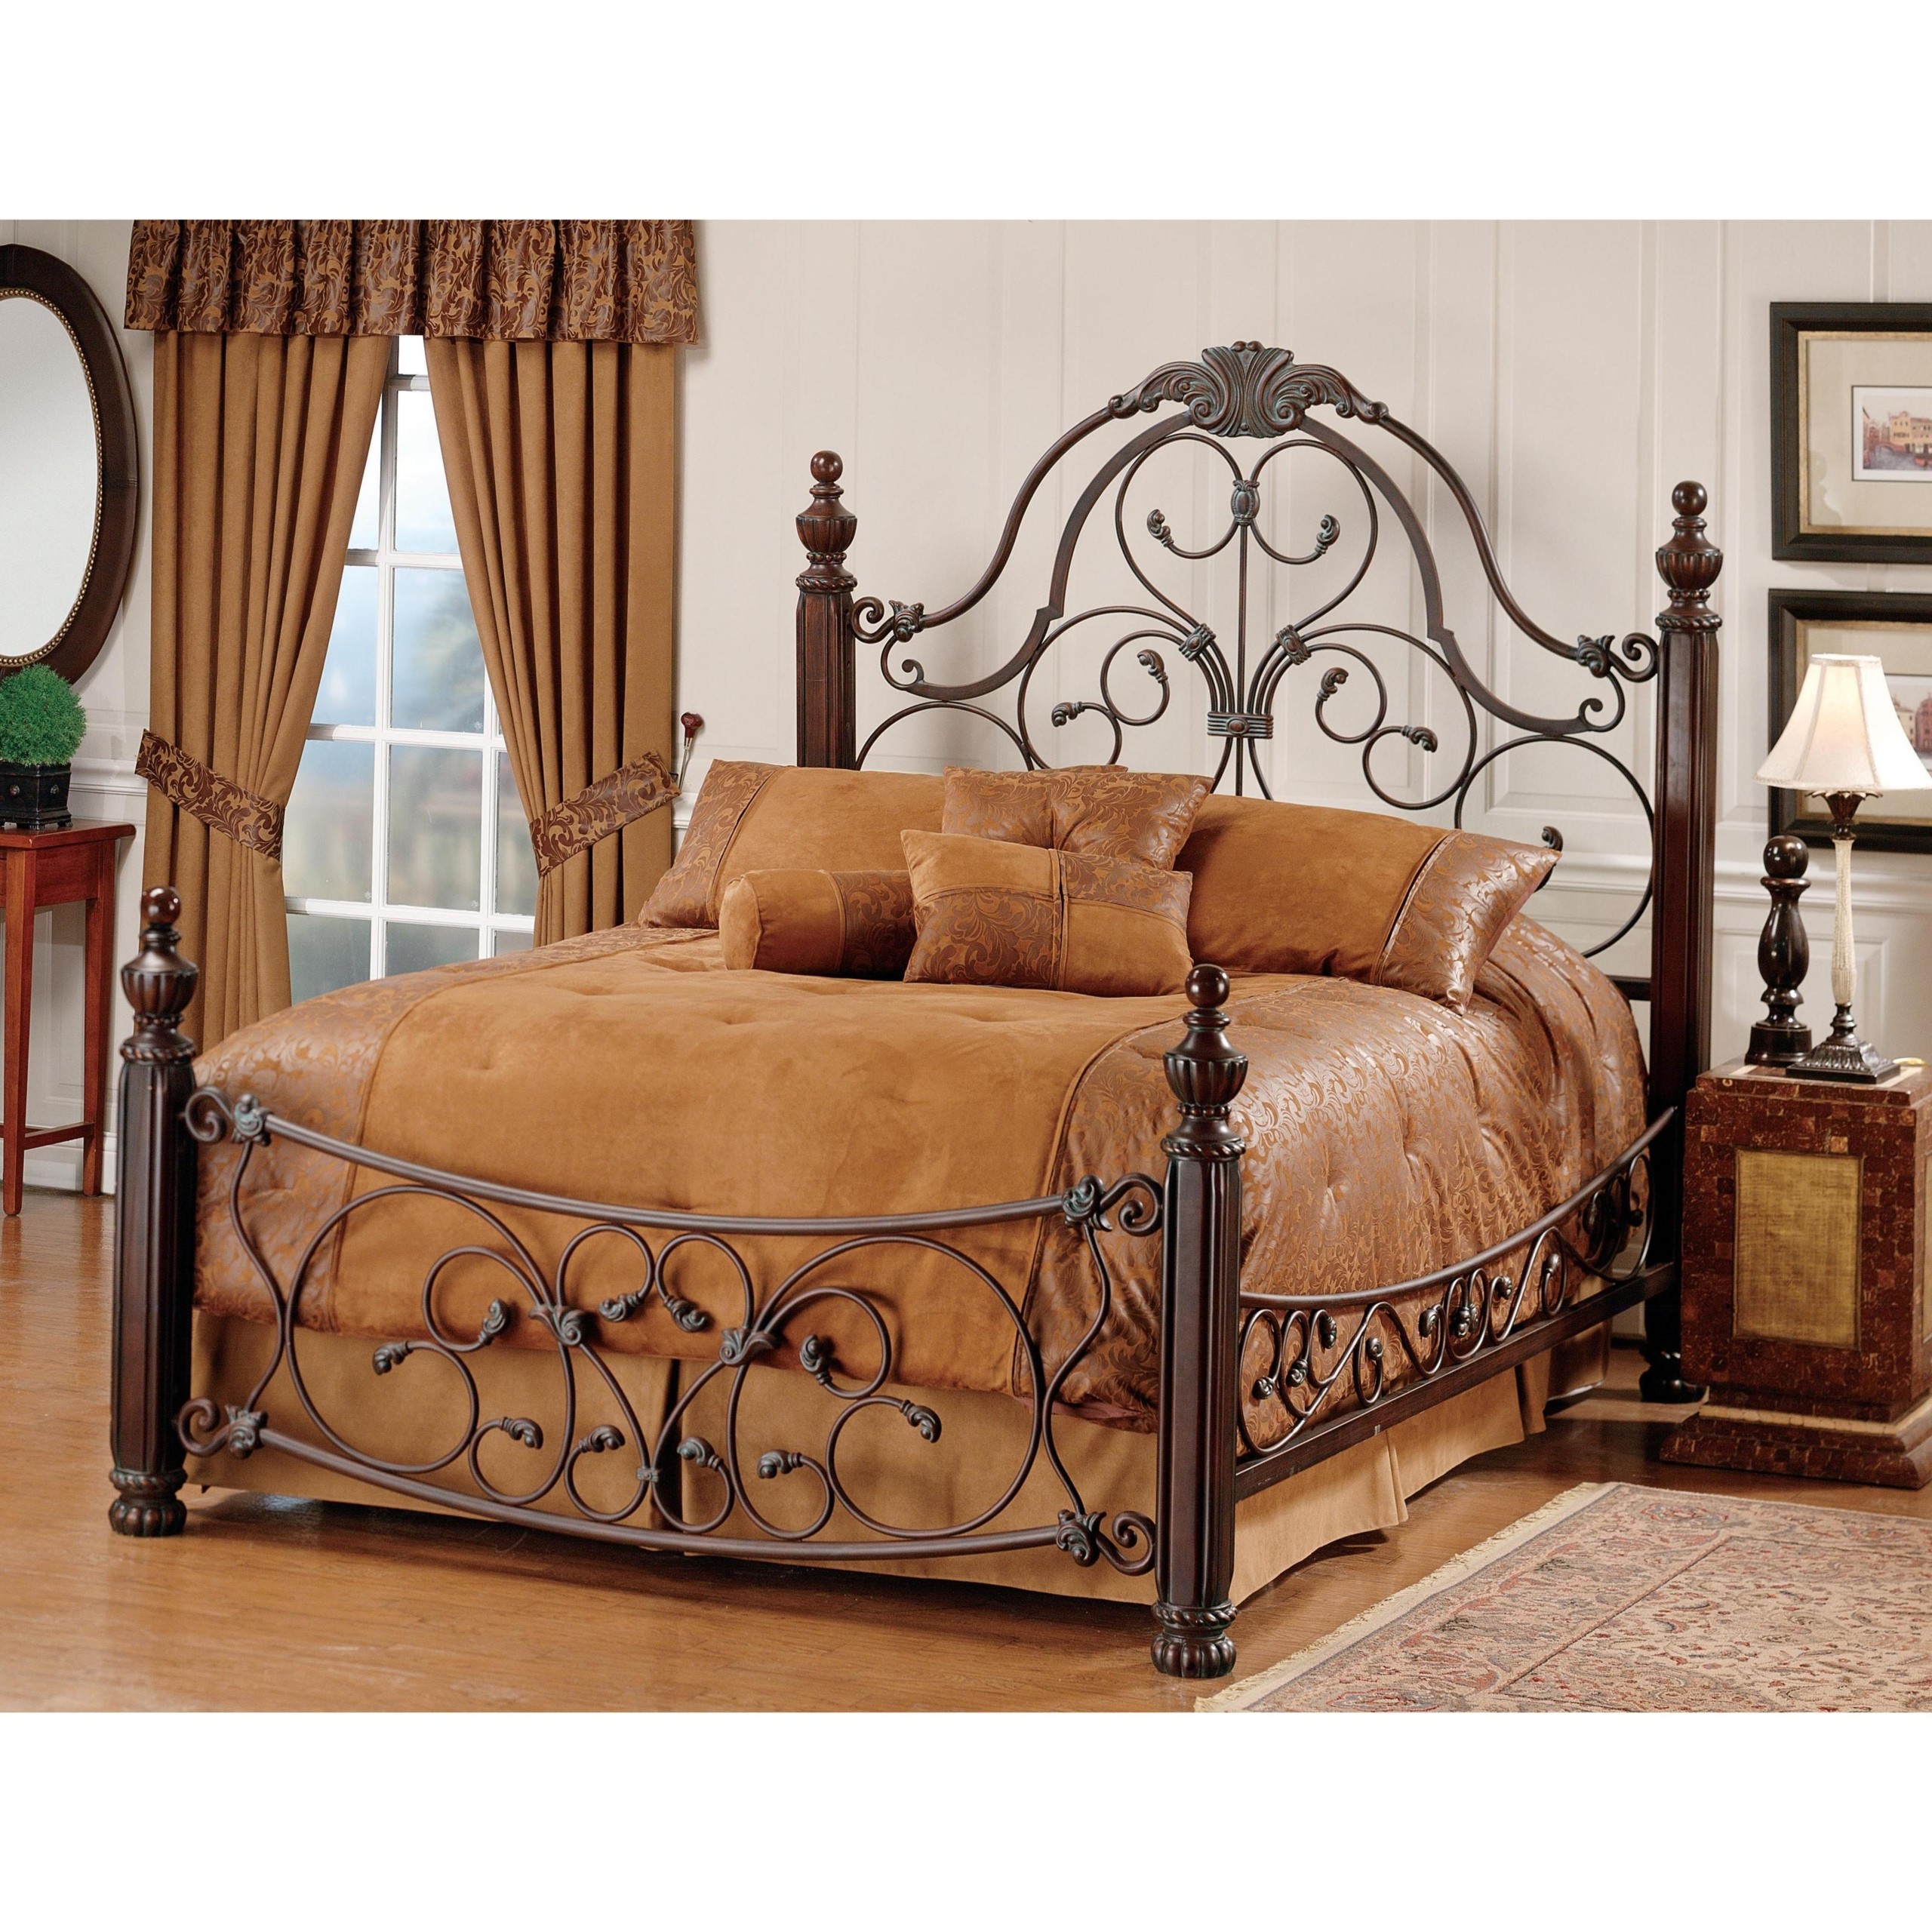 Ornate king size beds